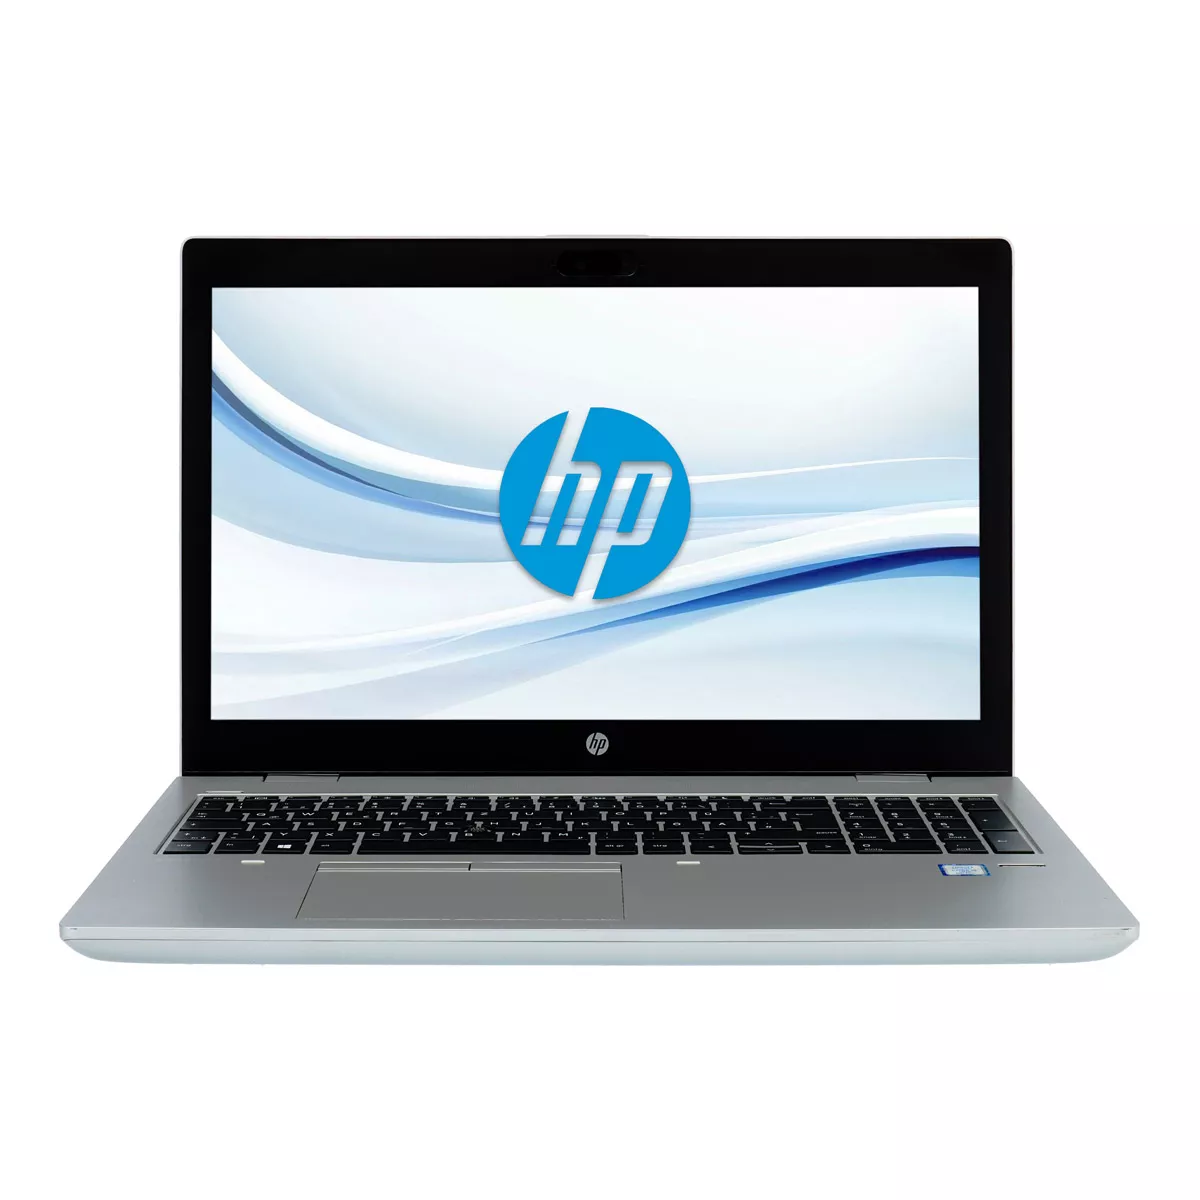 HP ProBook 650 G4 Core i5 8350U Full-HD 240 GB M.2 SSD Webcam A+